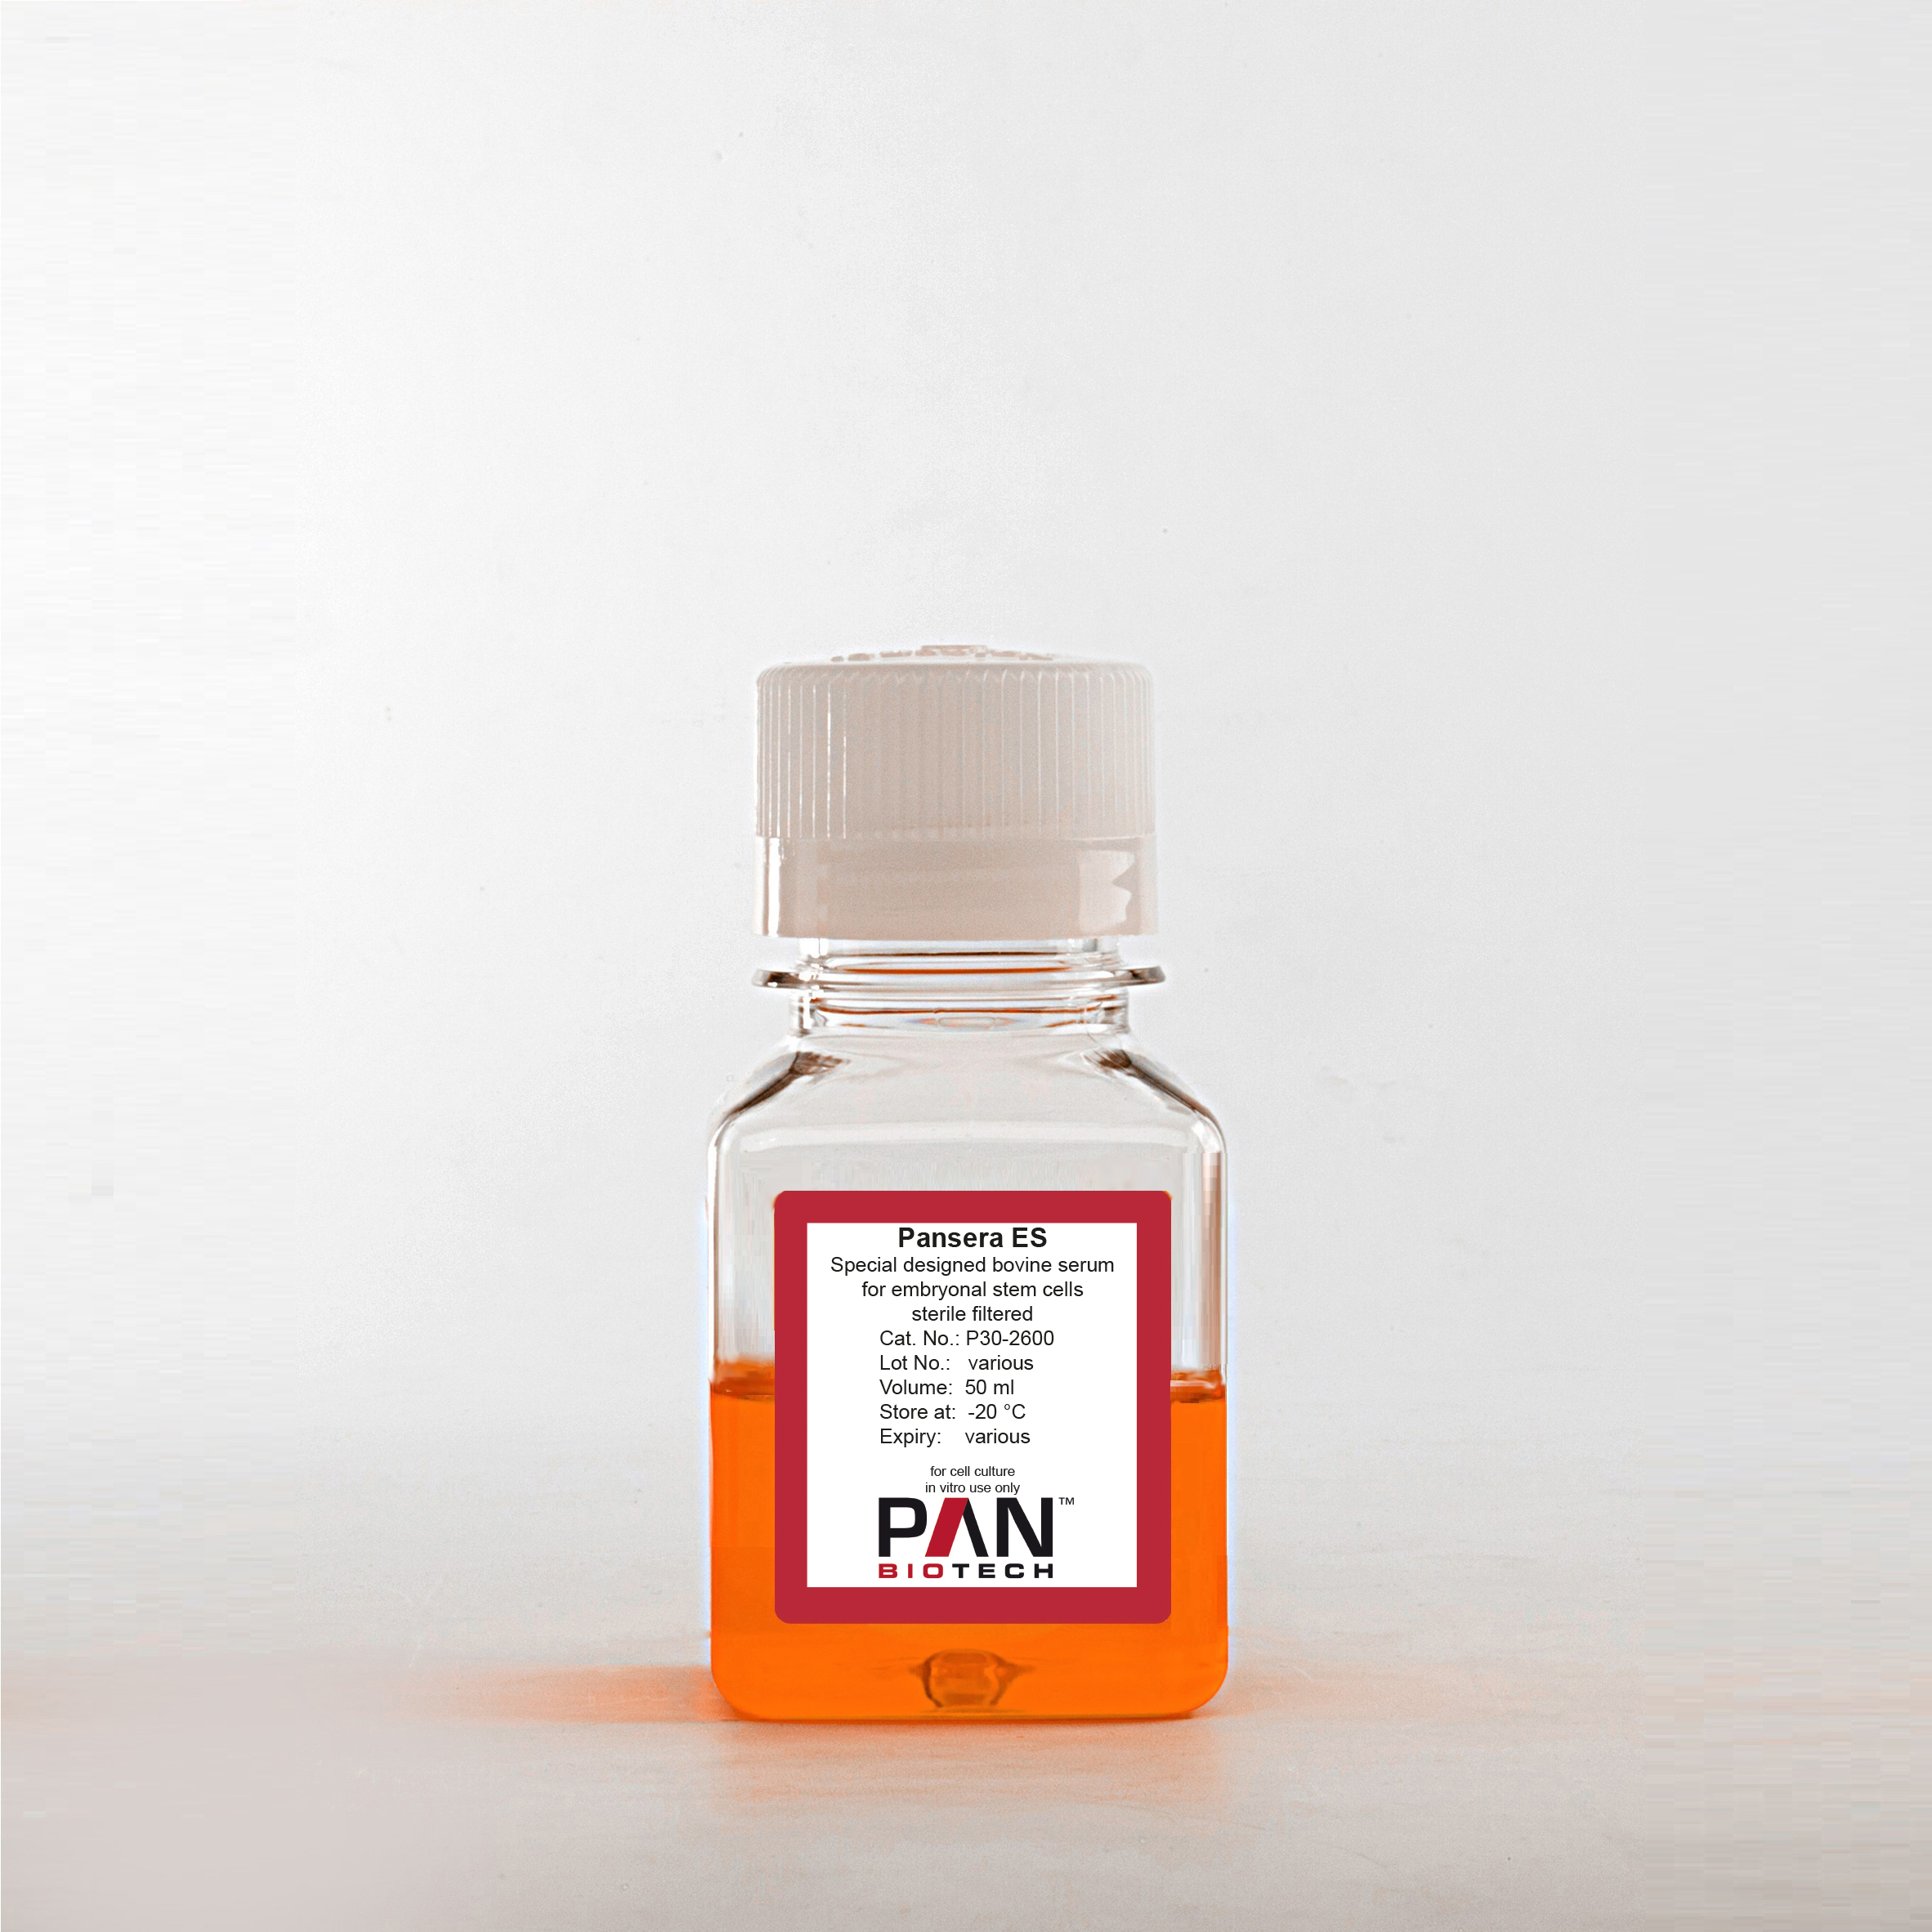 Pansera ES, South America origin, special designed bovine serum for embryonal stem cells, 0.2 µm sterile filtered